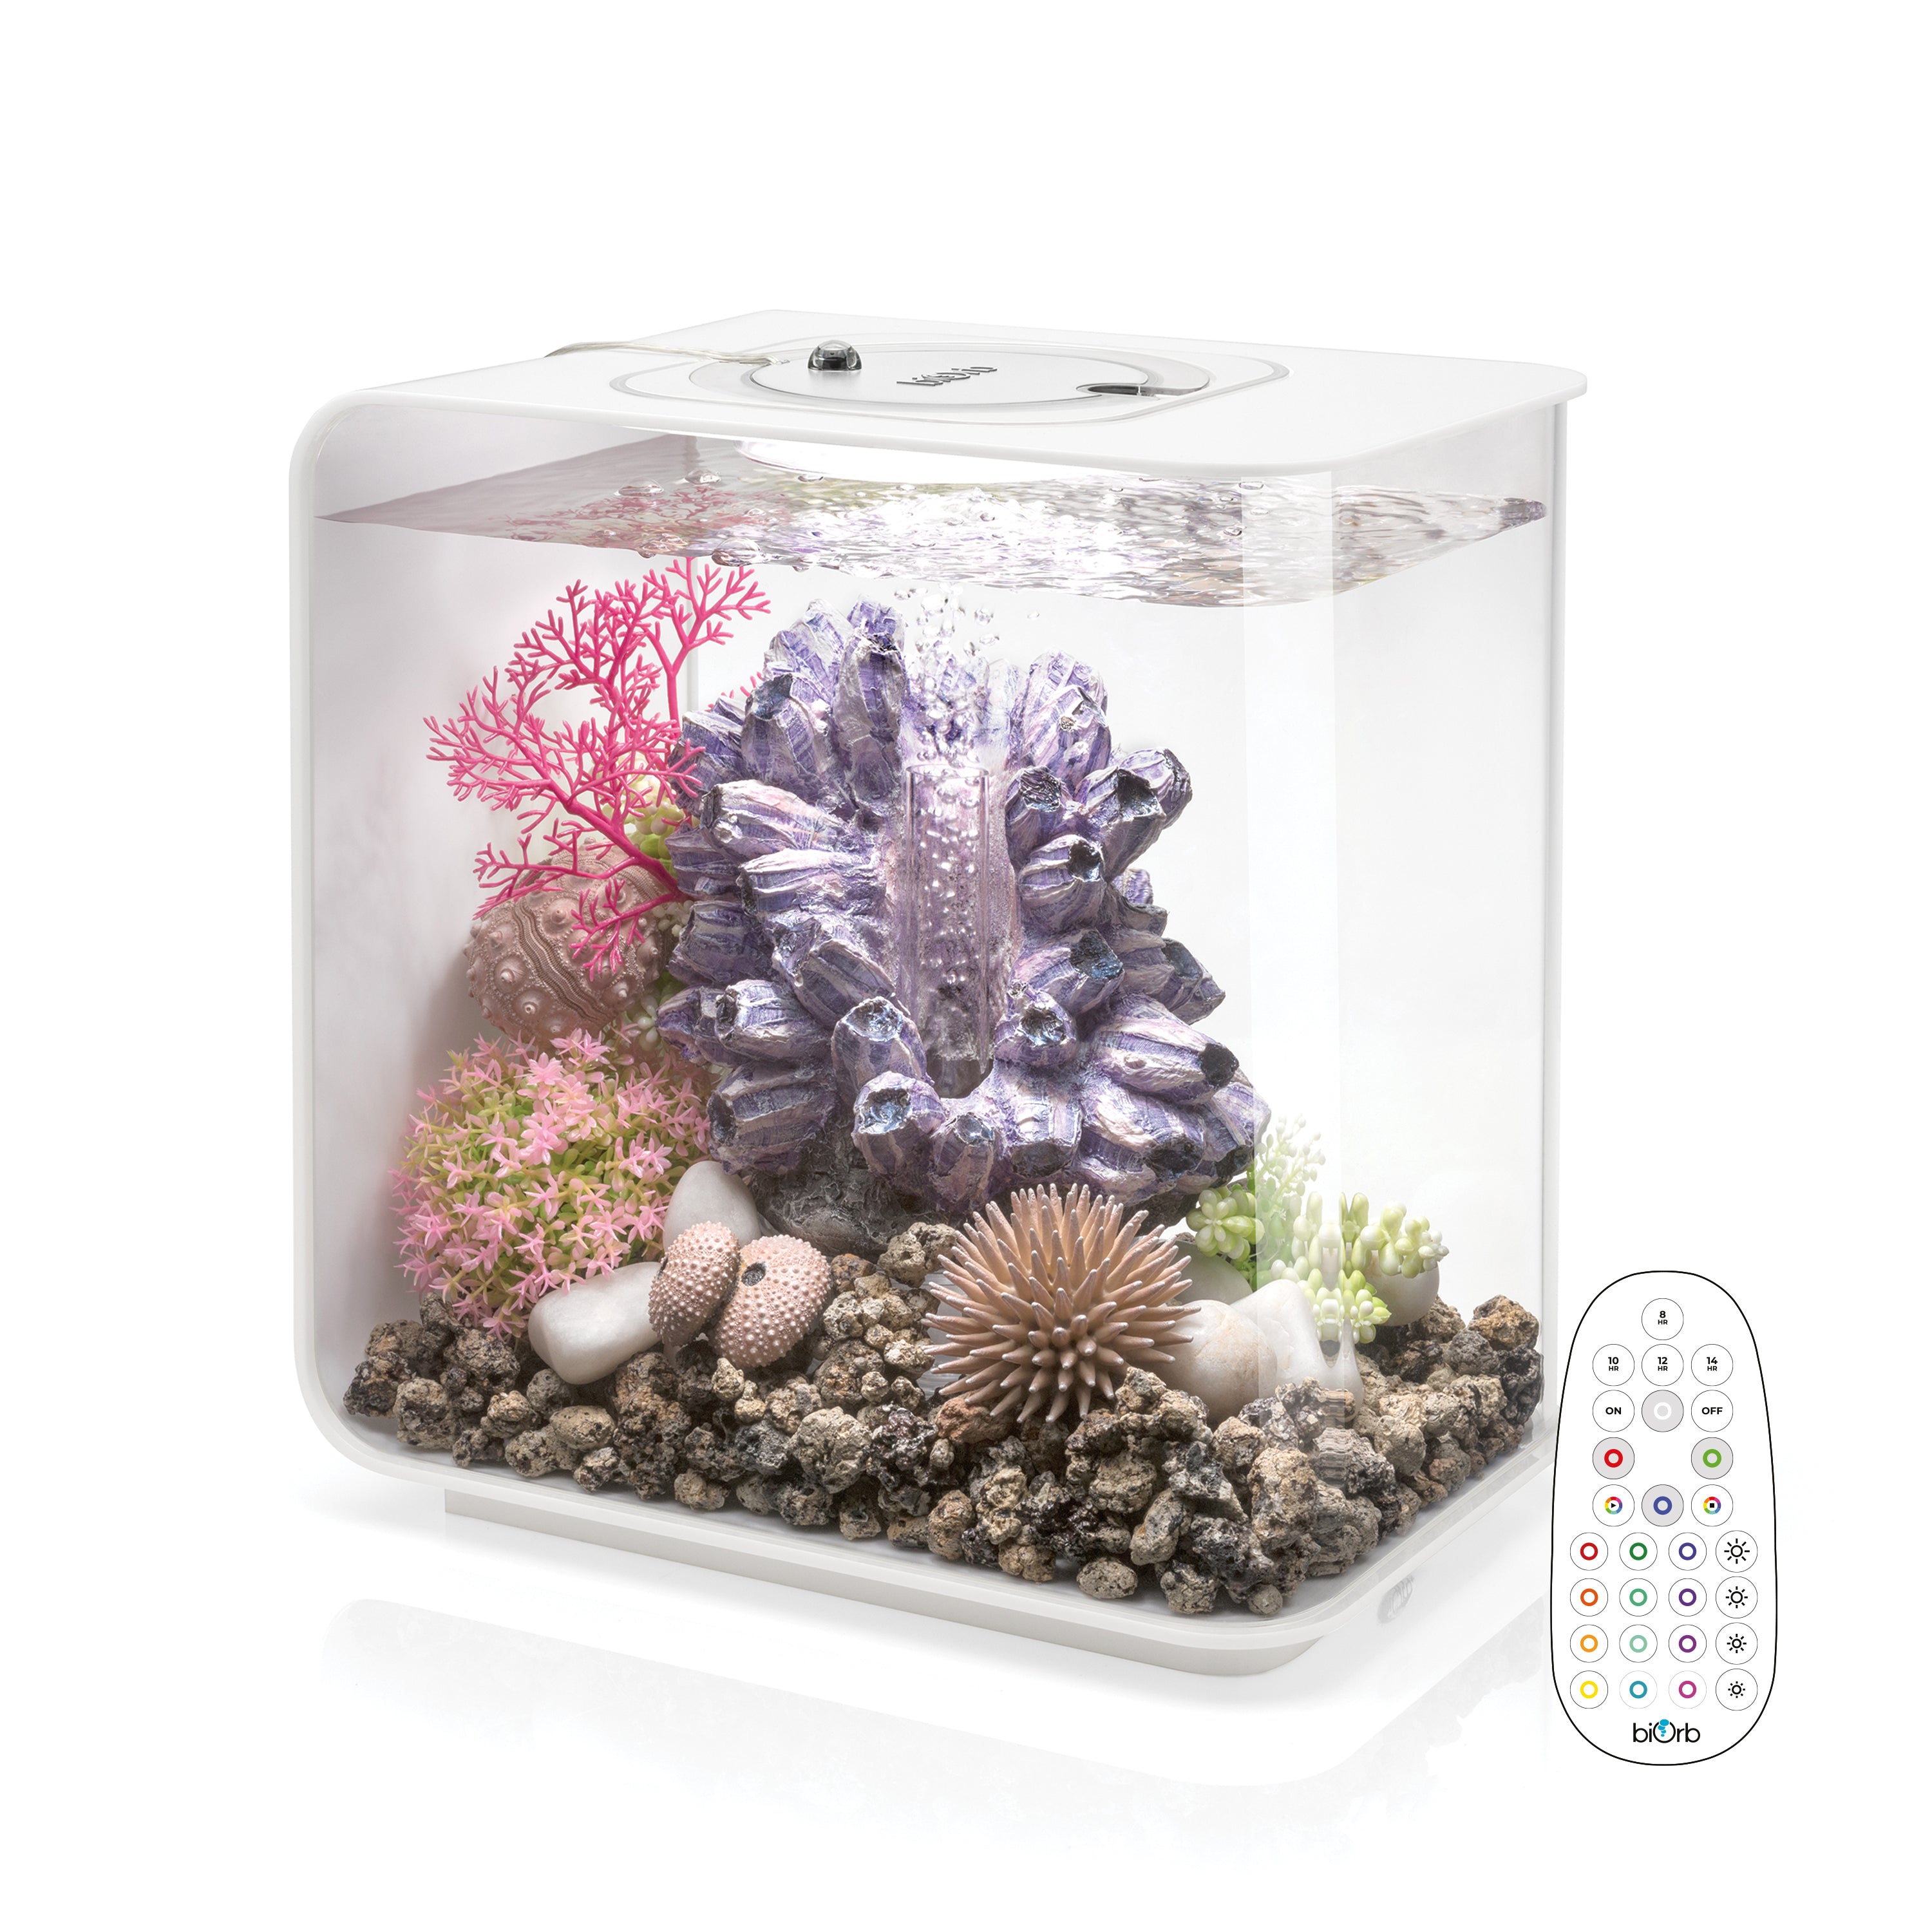 FLOW 15 Aquarium with Multi Colour LED light - remote control